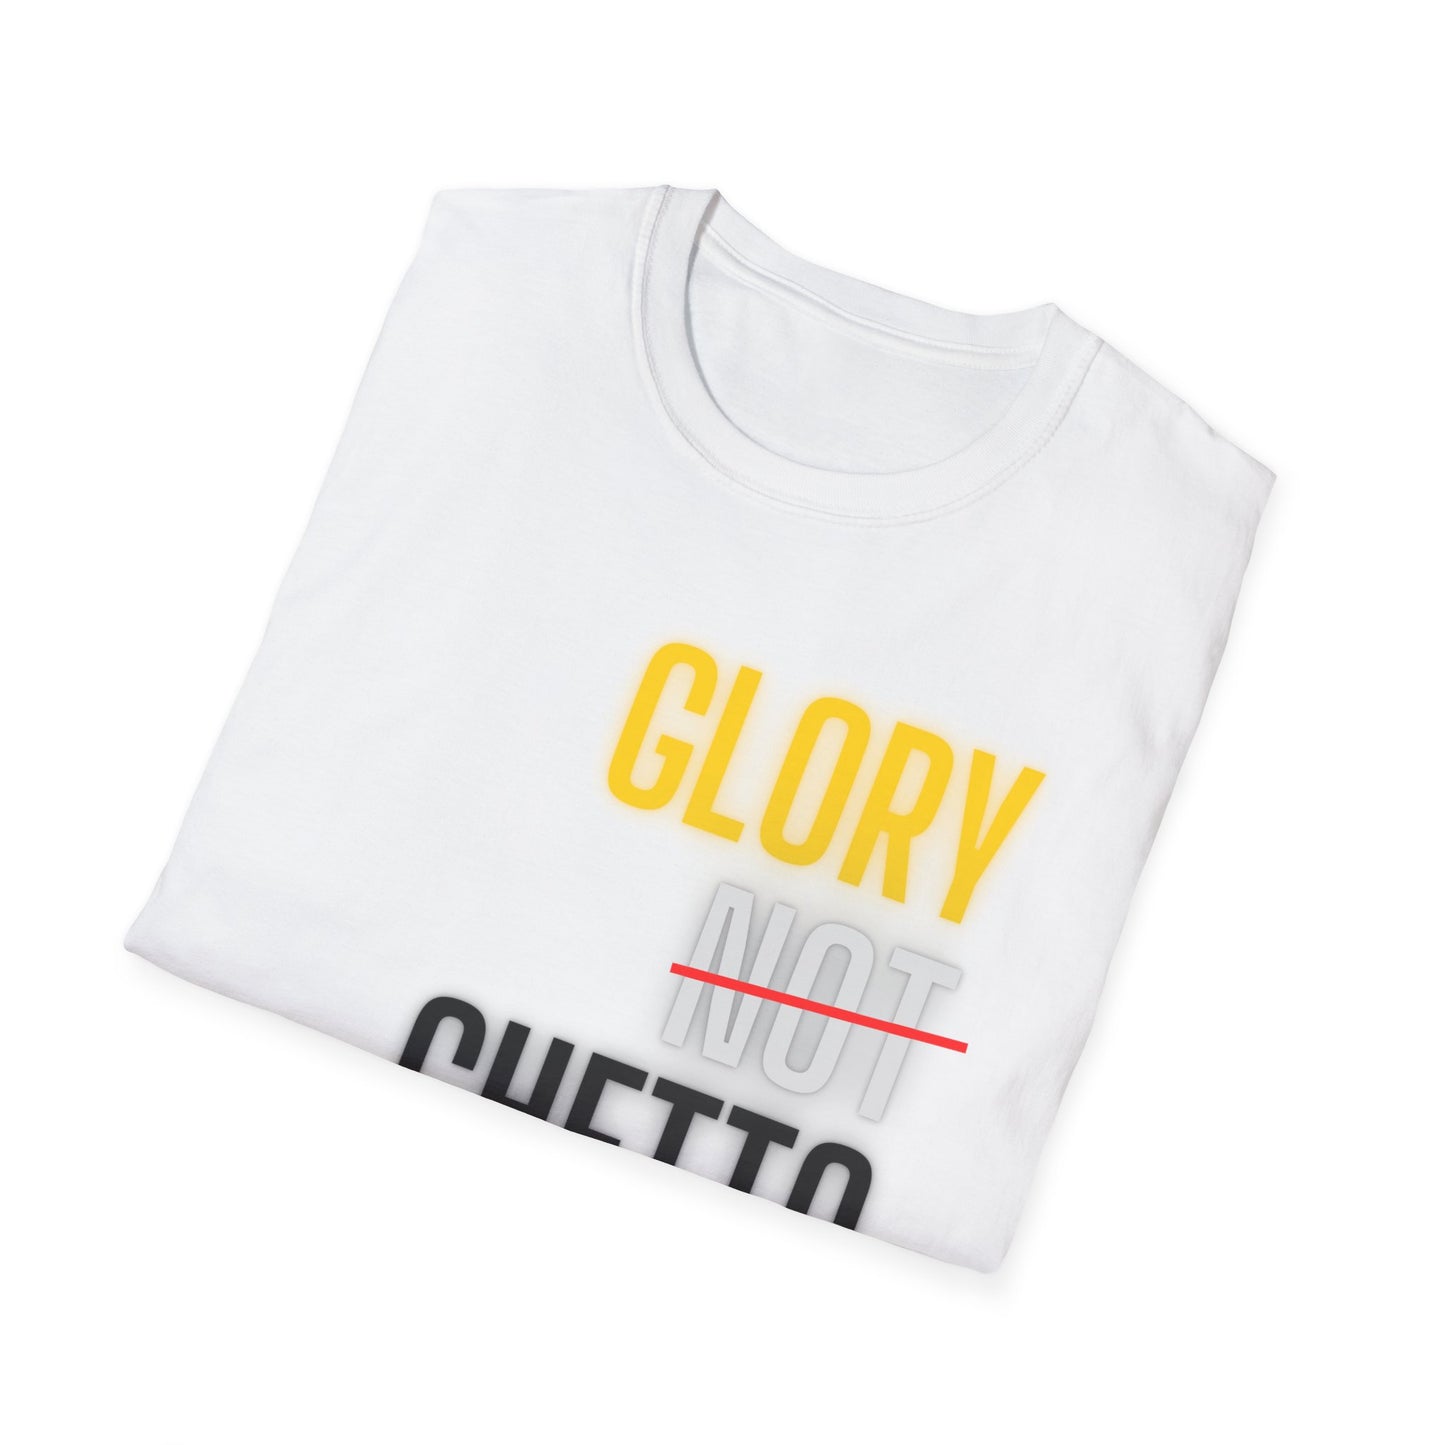 Glory Not Ghetto Unisex Softstyle T-Shirt